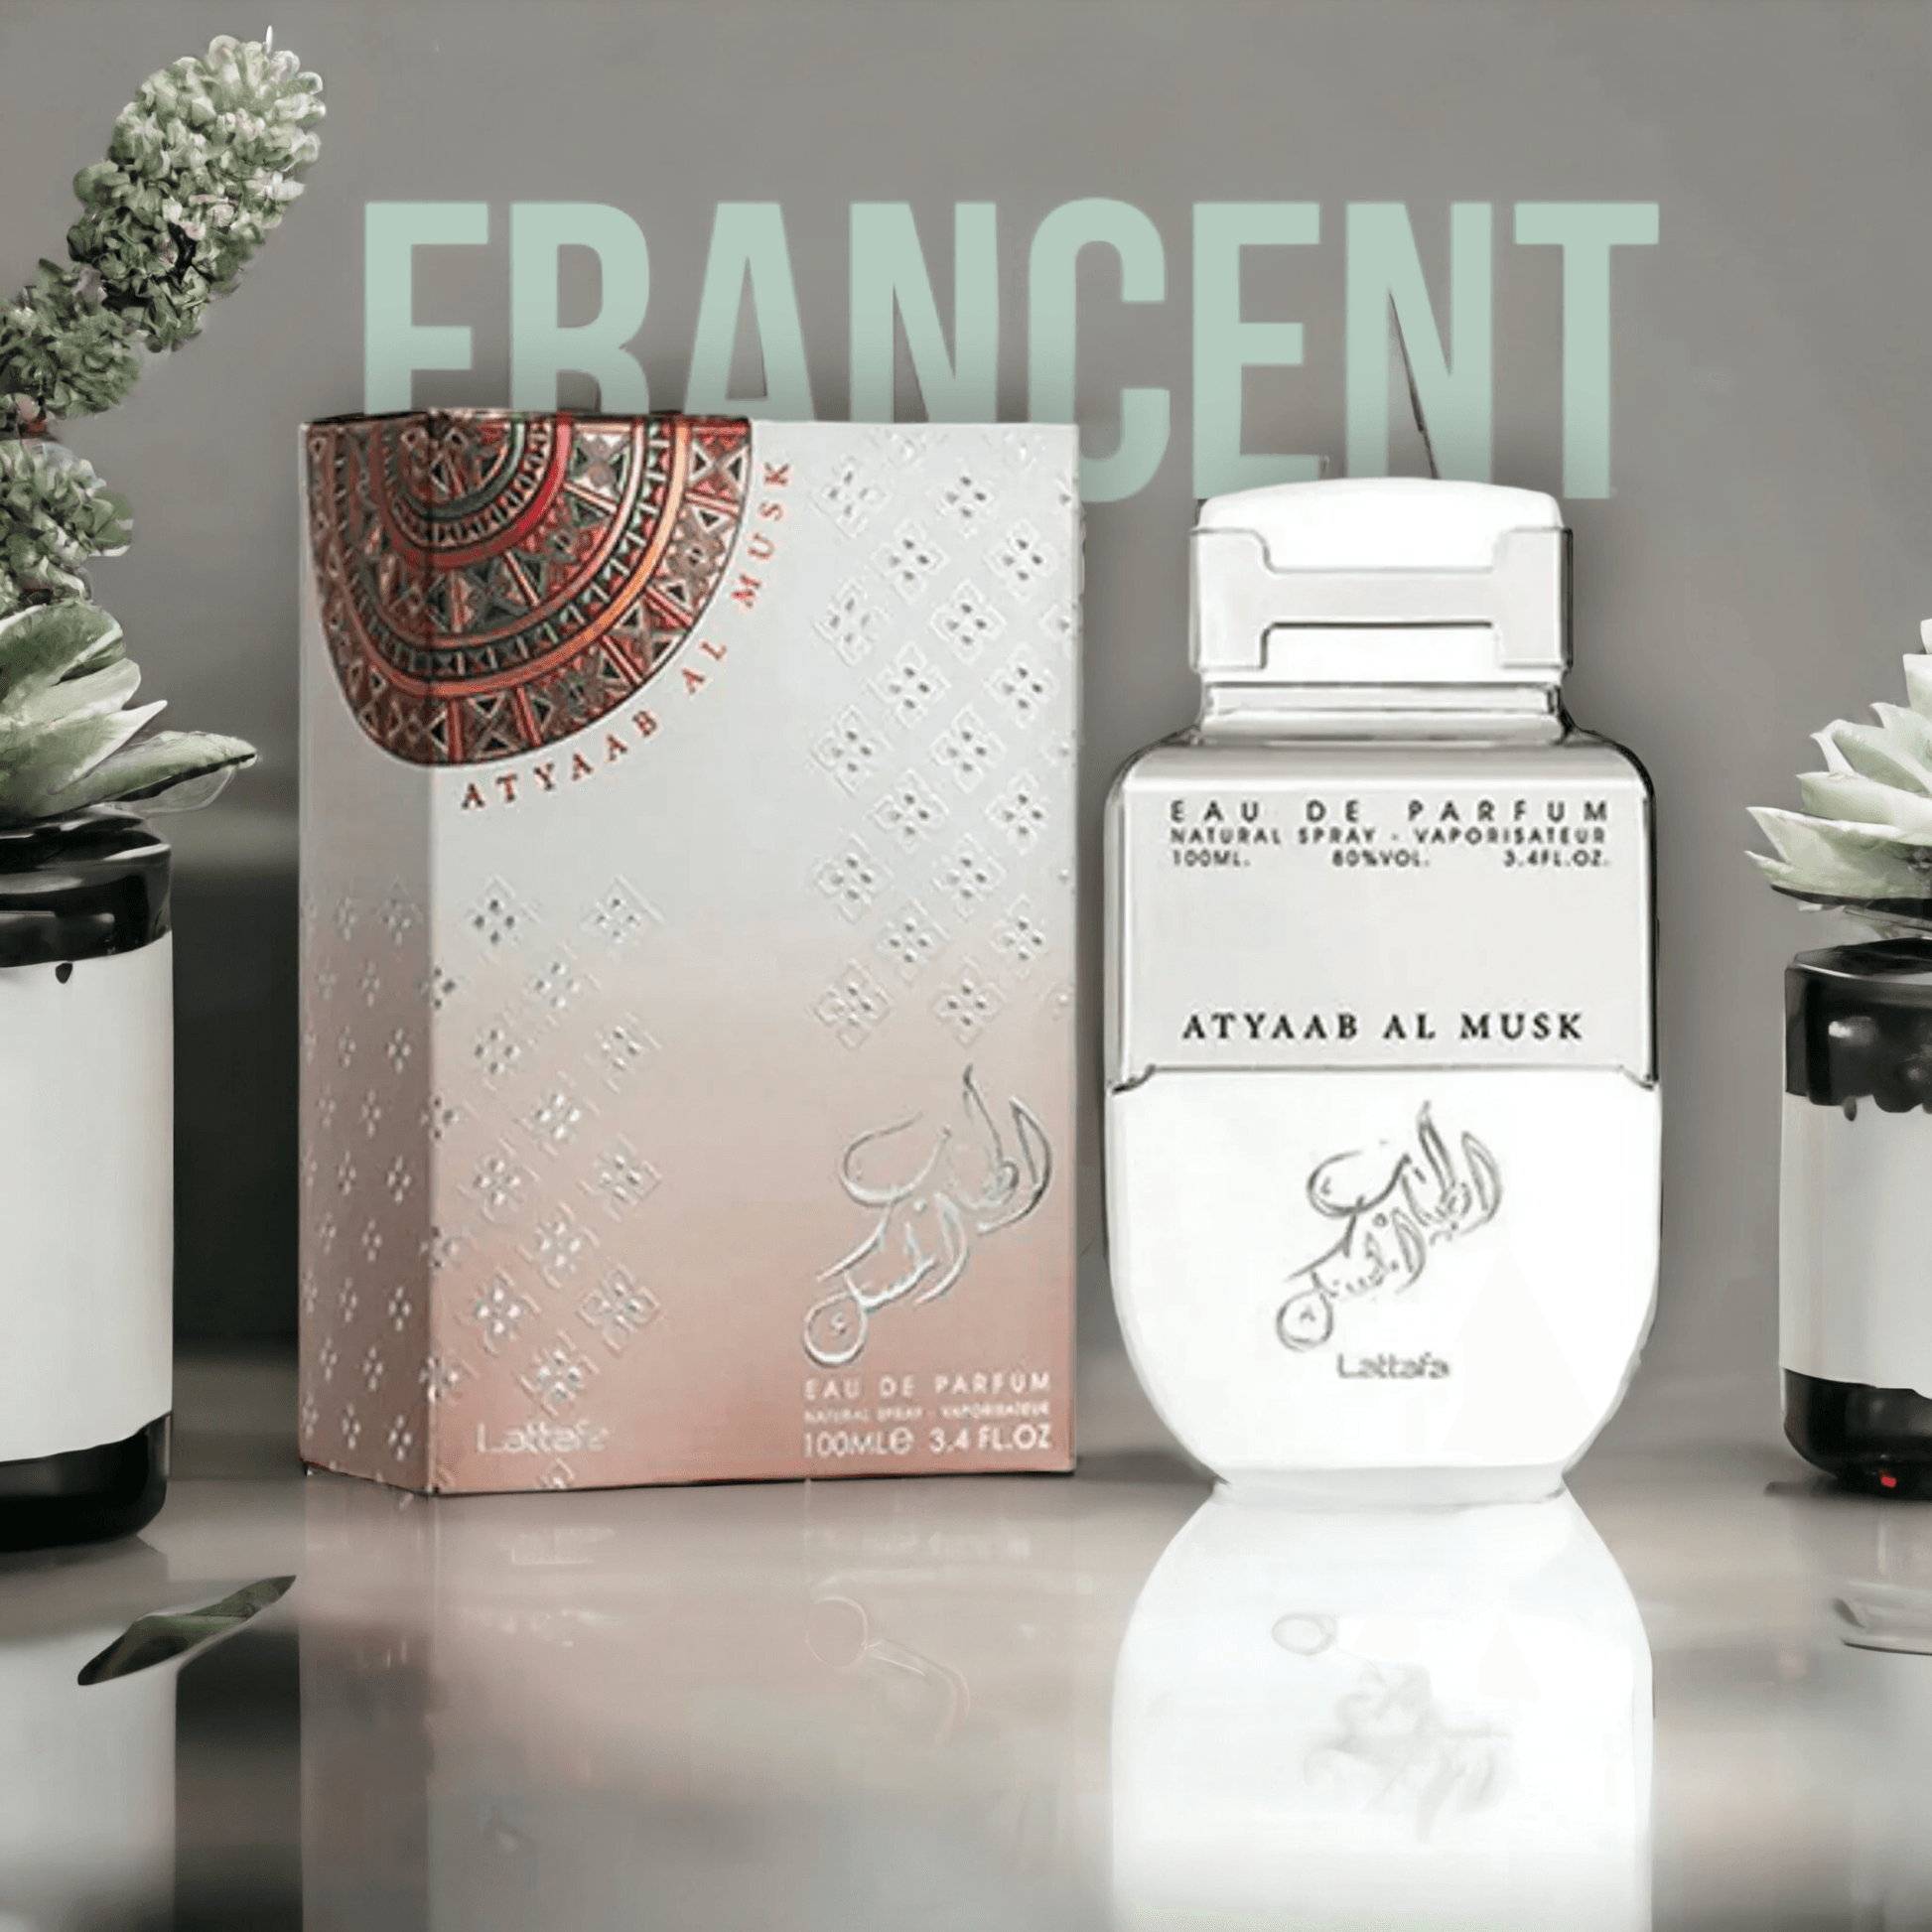 Lattafa | Atyab Al Musk - Francent Perfumes